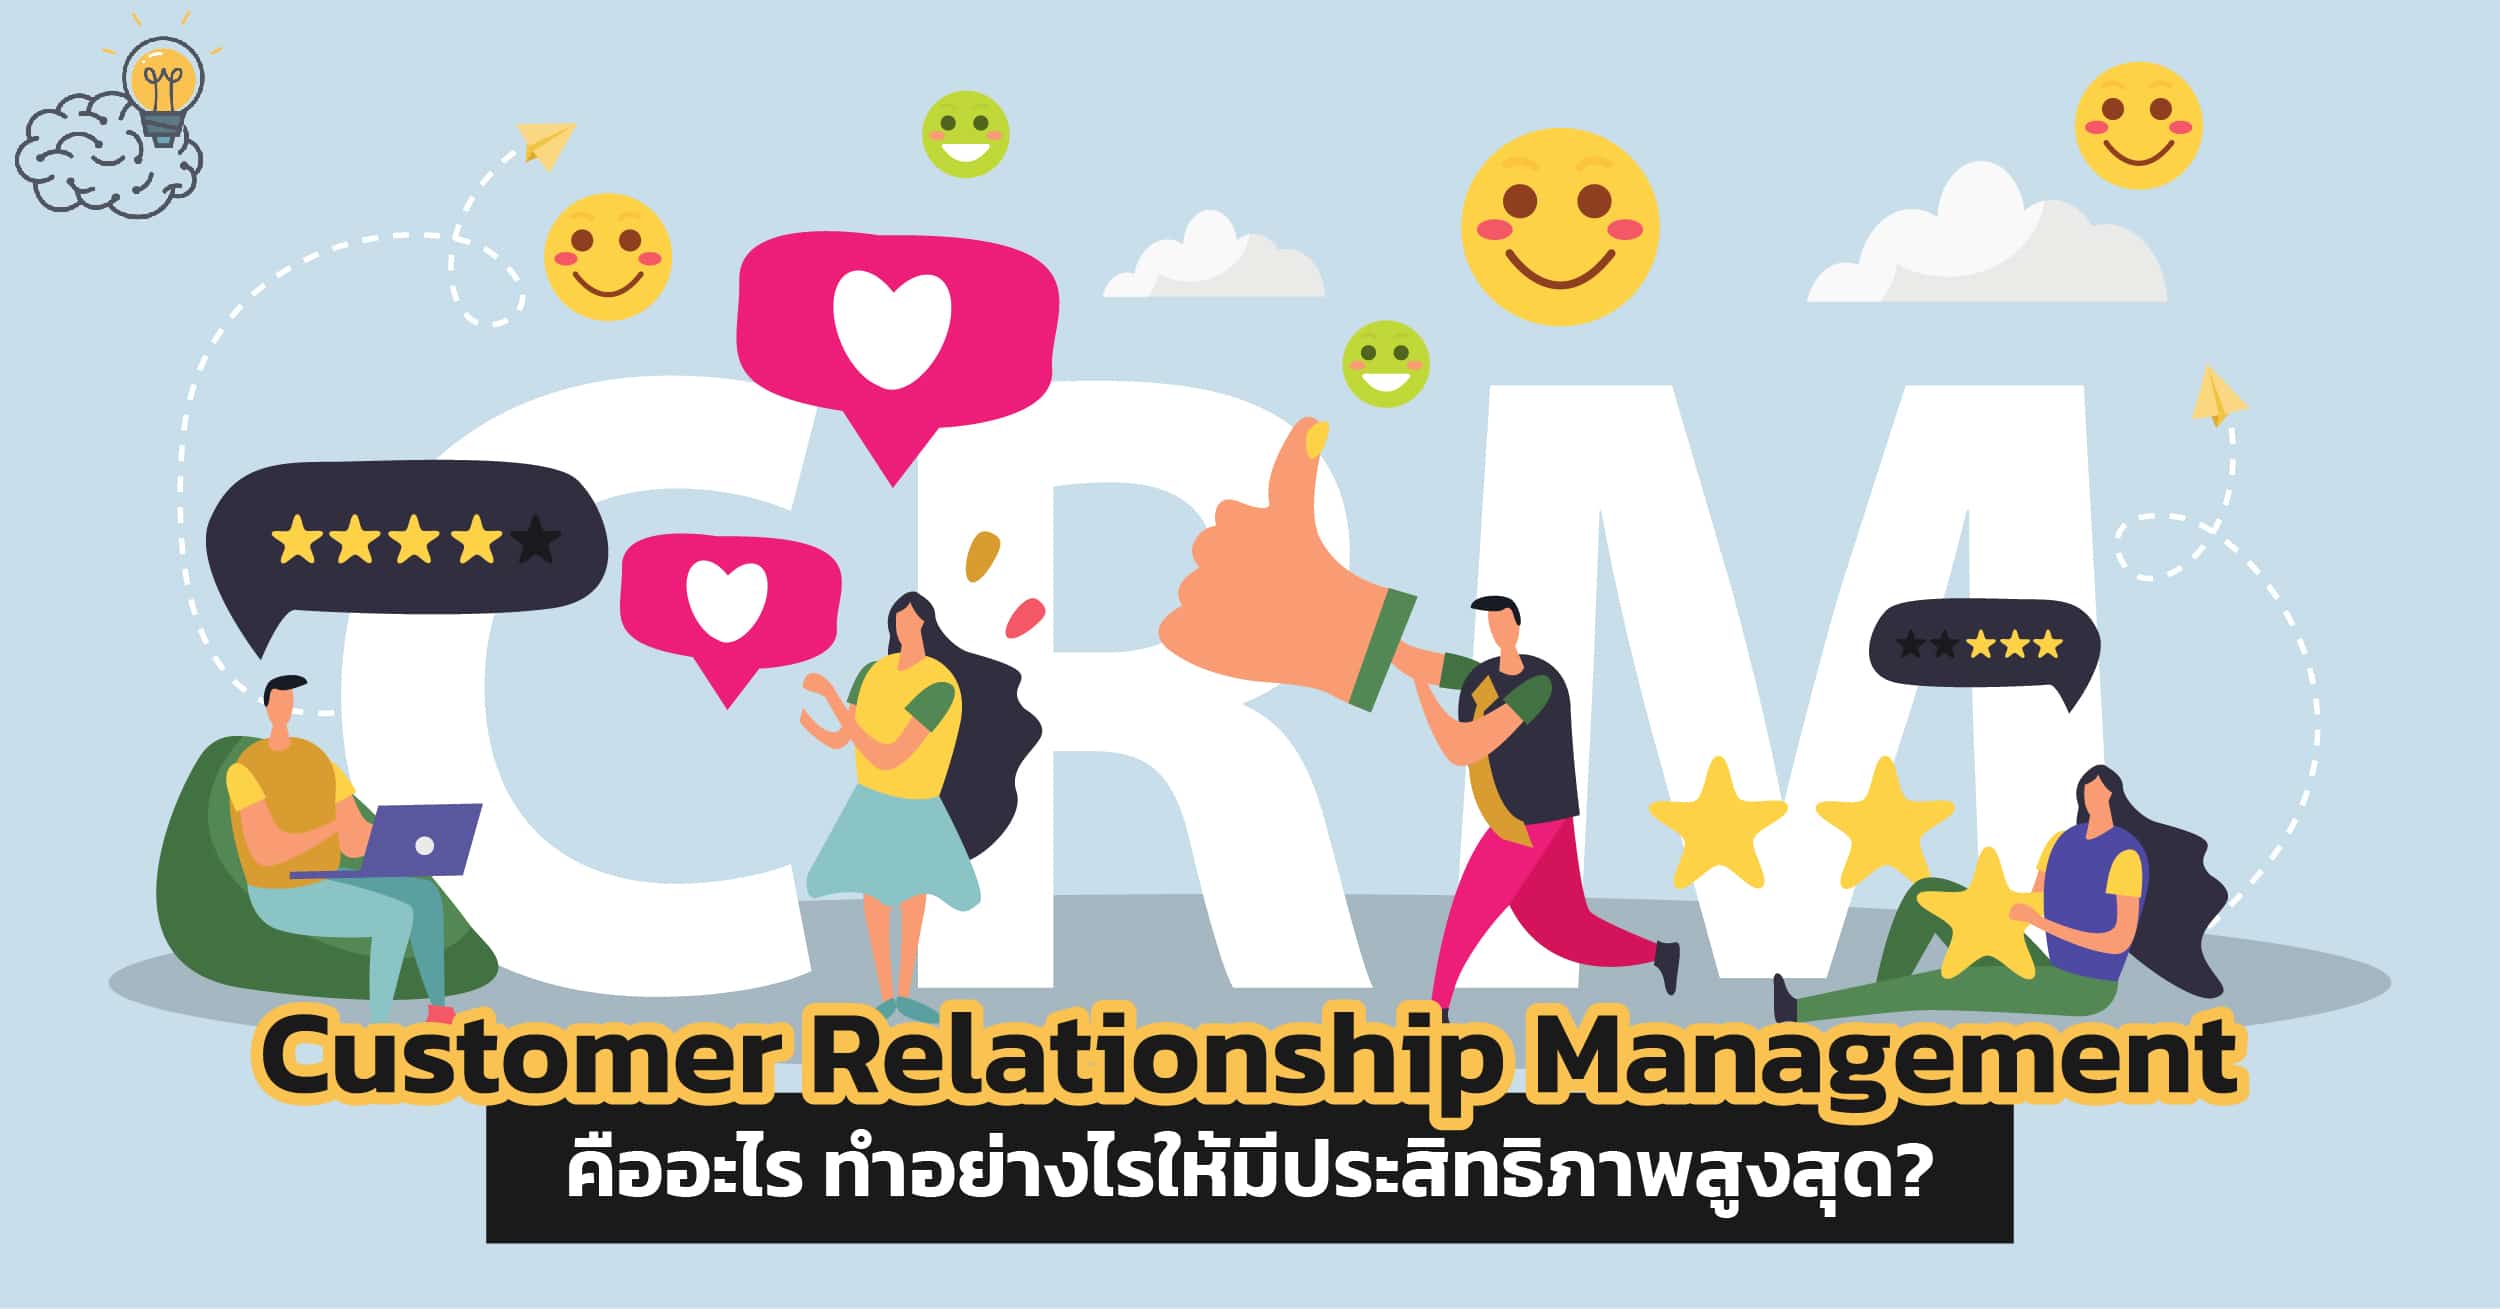 Customer Relationship Management (Crm) คืออะไร  ทำอย่างไรให้มีประสิทธิภาพสูงสุด? - The Wisdom Academy